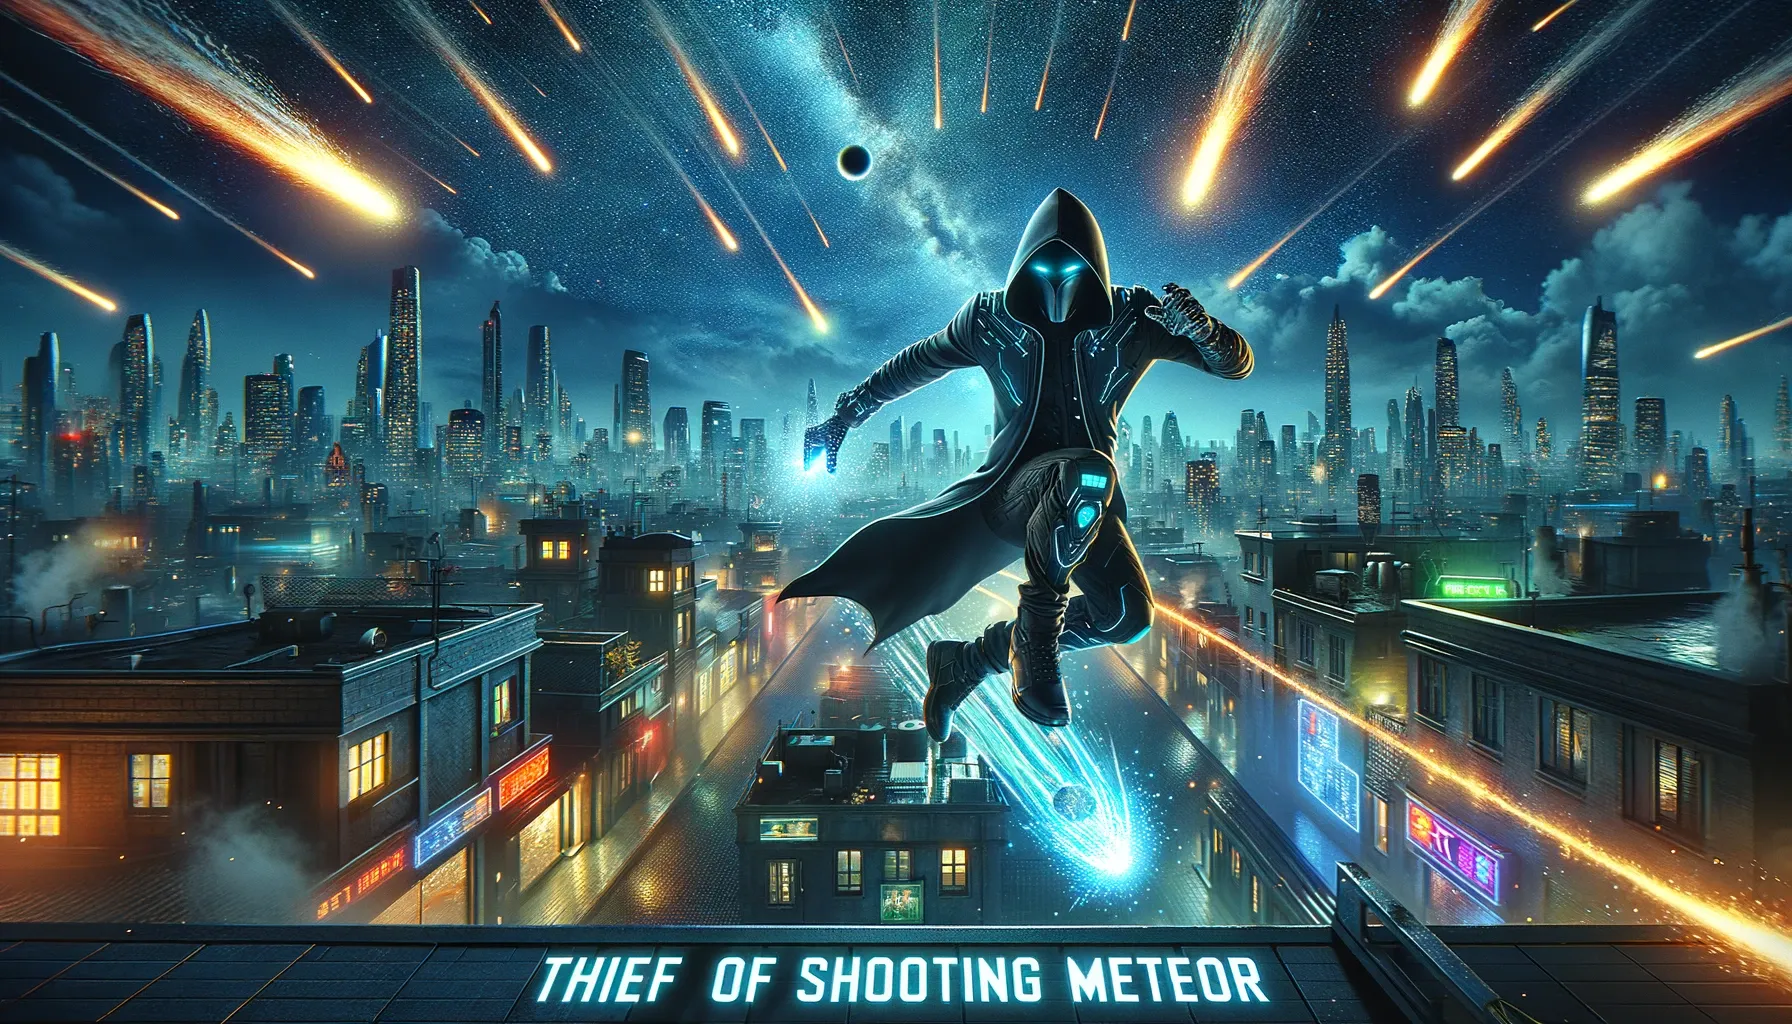 Thief of Shooting Meteor